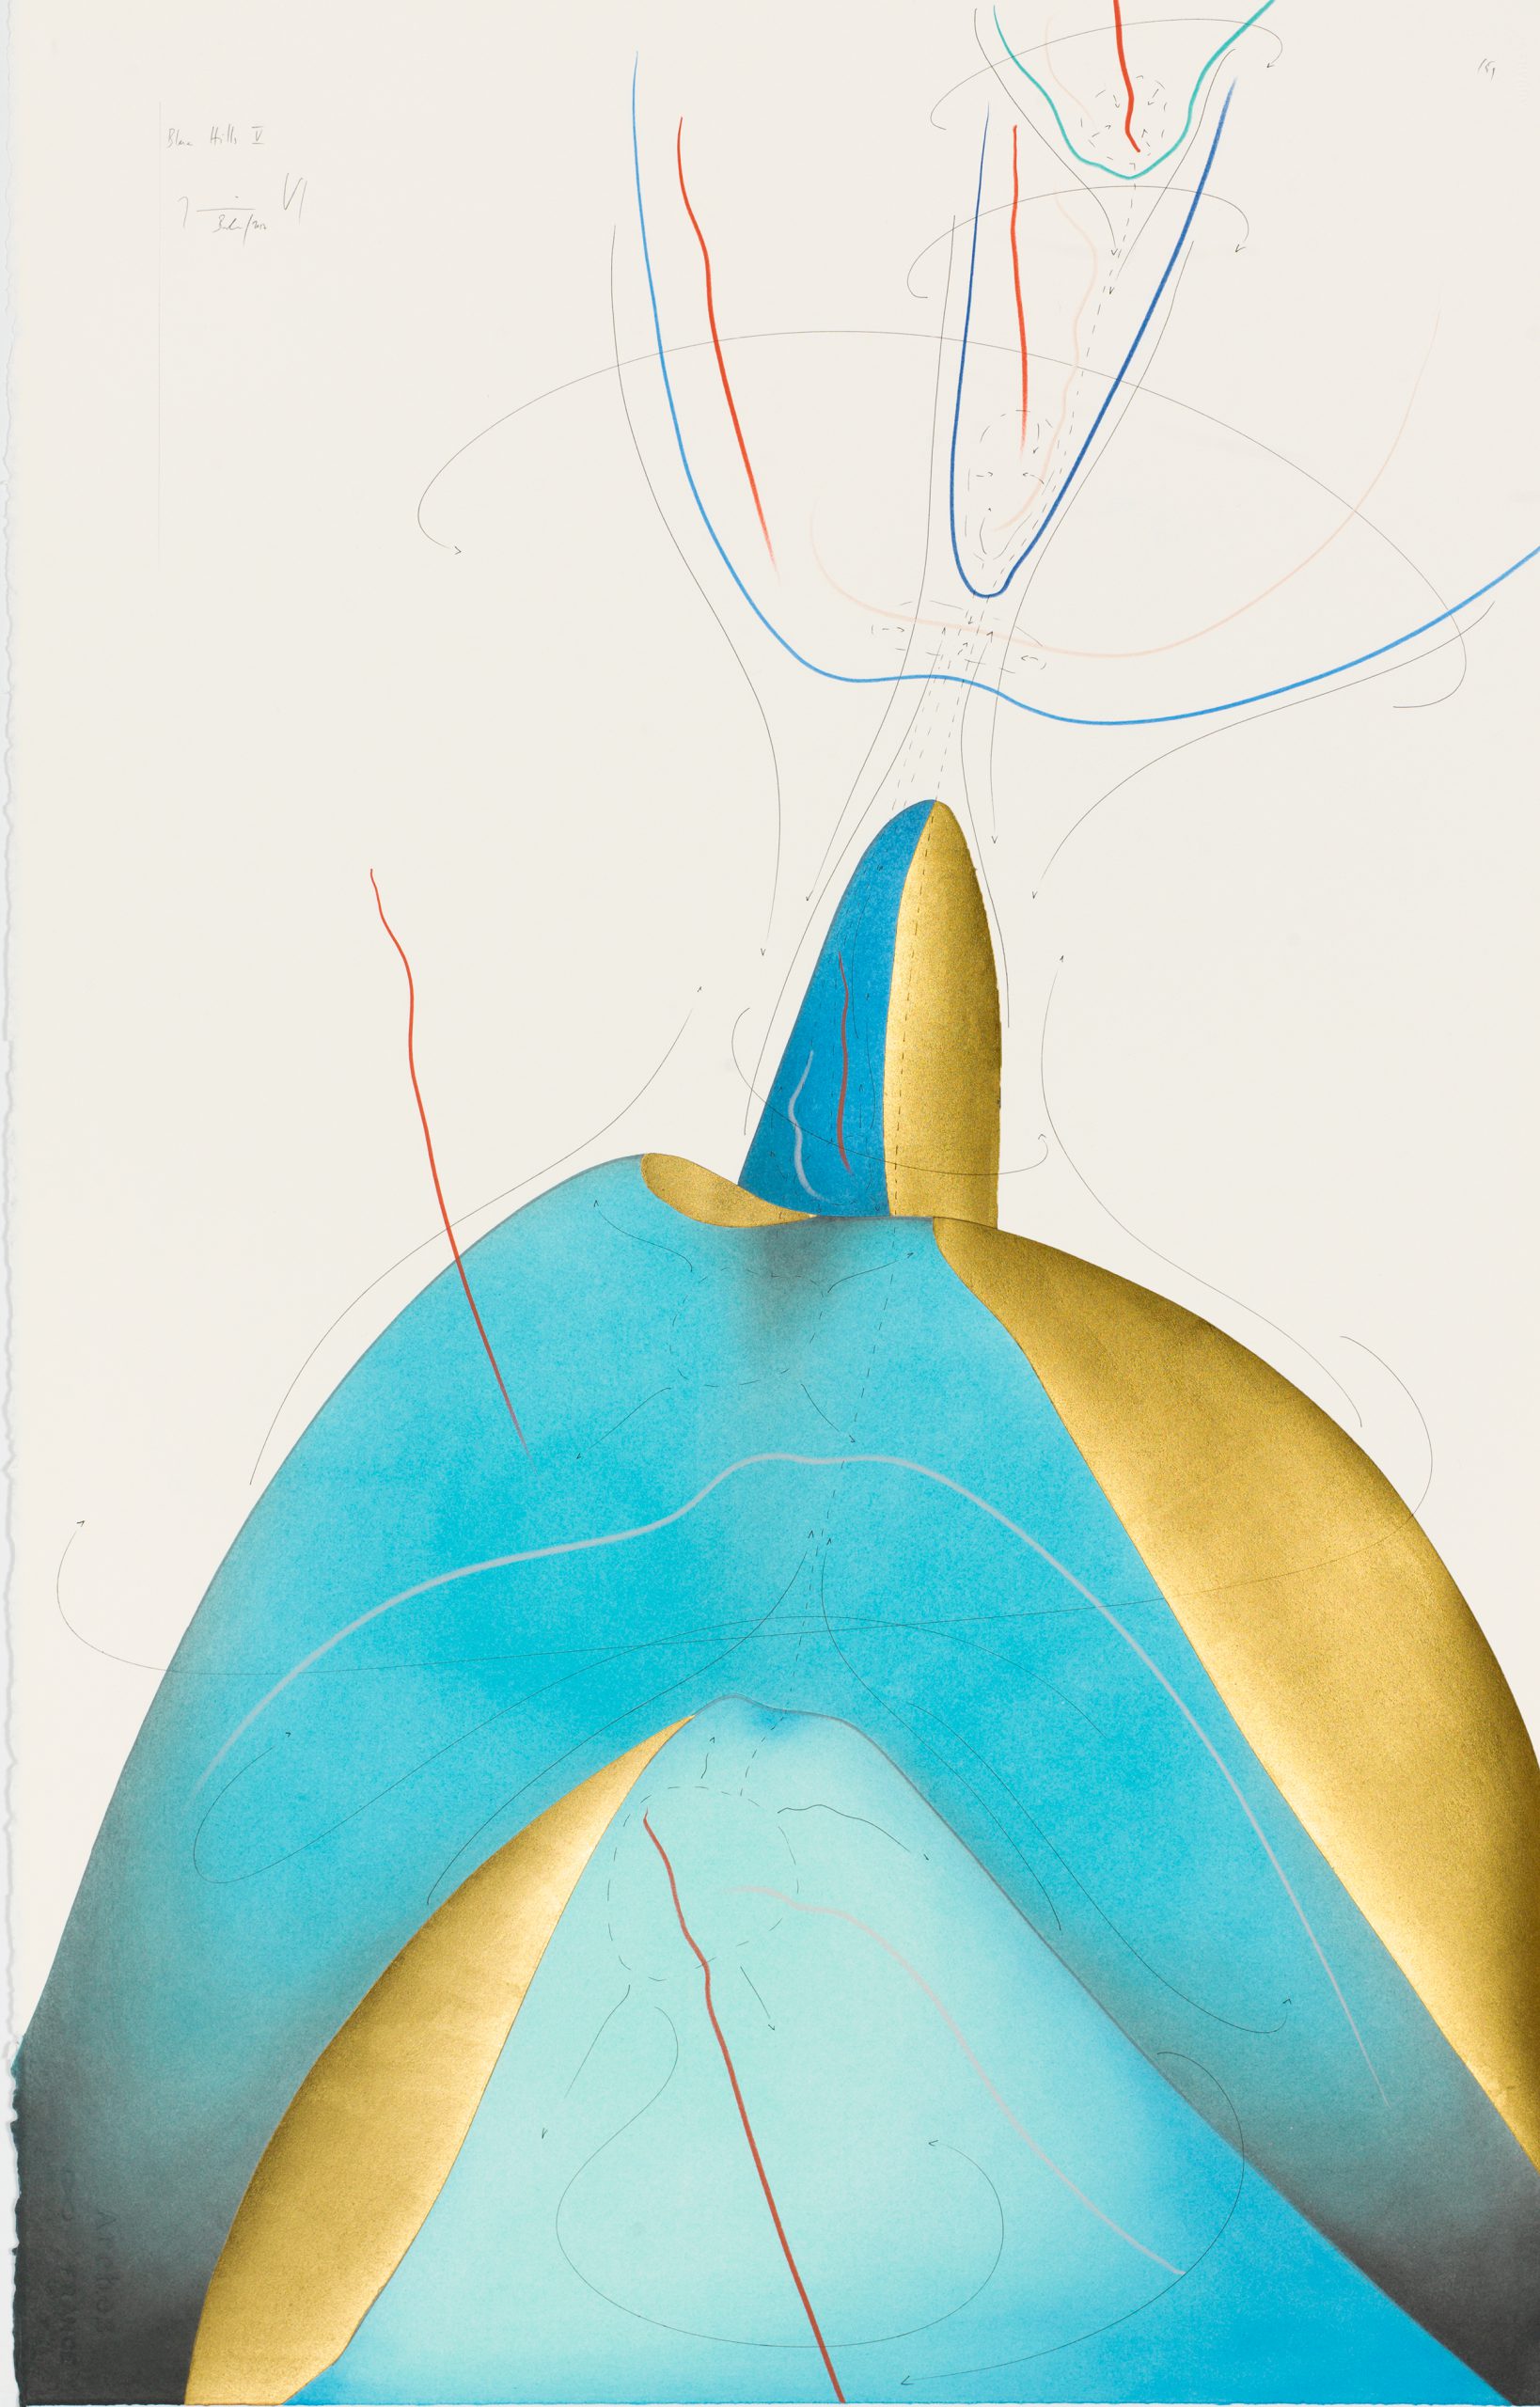 Blue Hills V Berlin 2017 102 x 66 cm Tinte, Blattgold, Pastell, Ölkreide, Graphit auf Papier, Unikat, Signiert Ink, gold leaf, pastels, oil chalks, graphite on paper, unique work, signed WV 2017-147